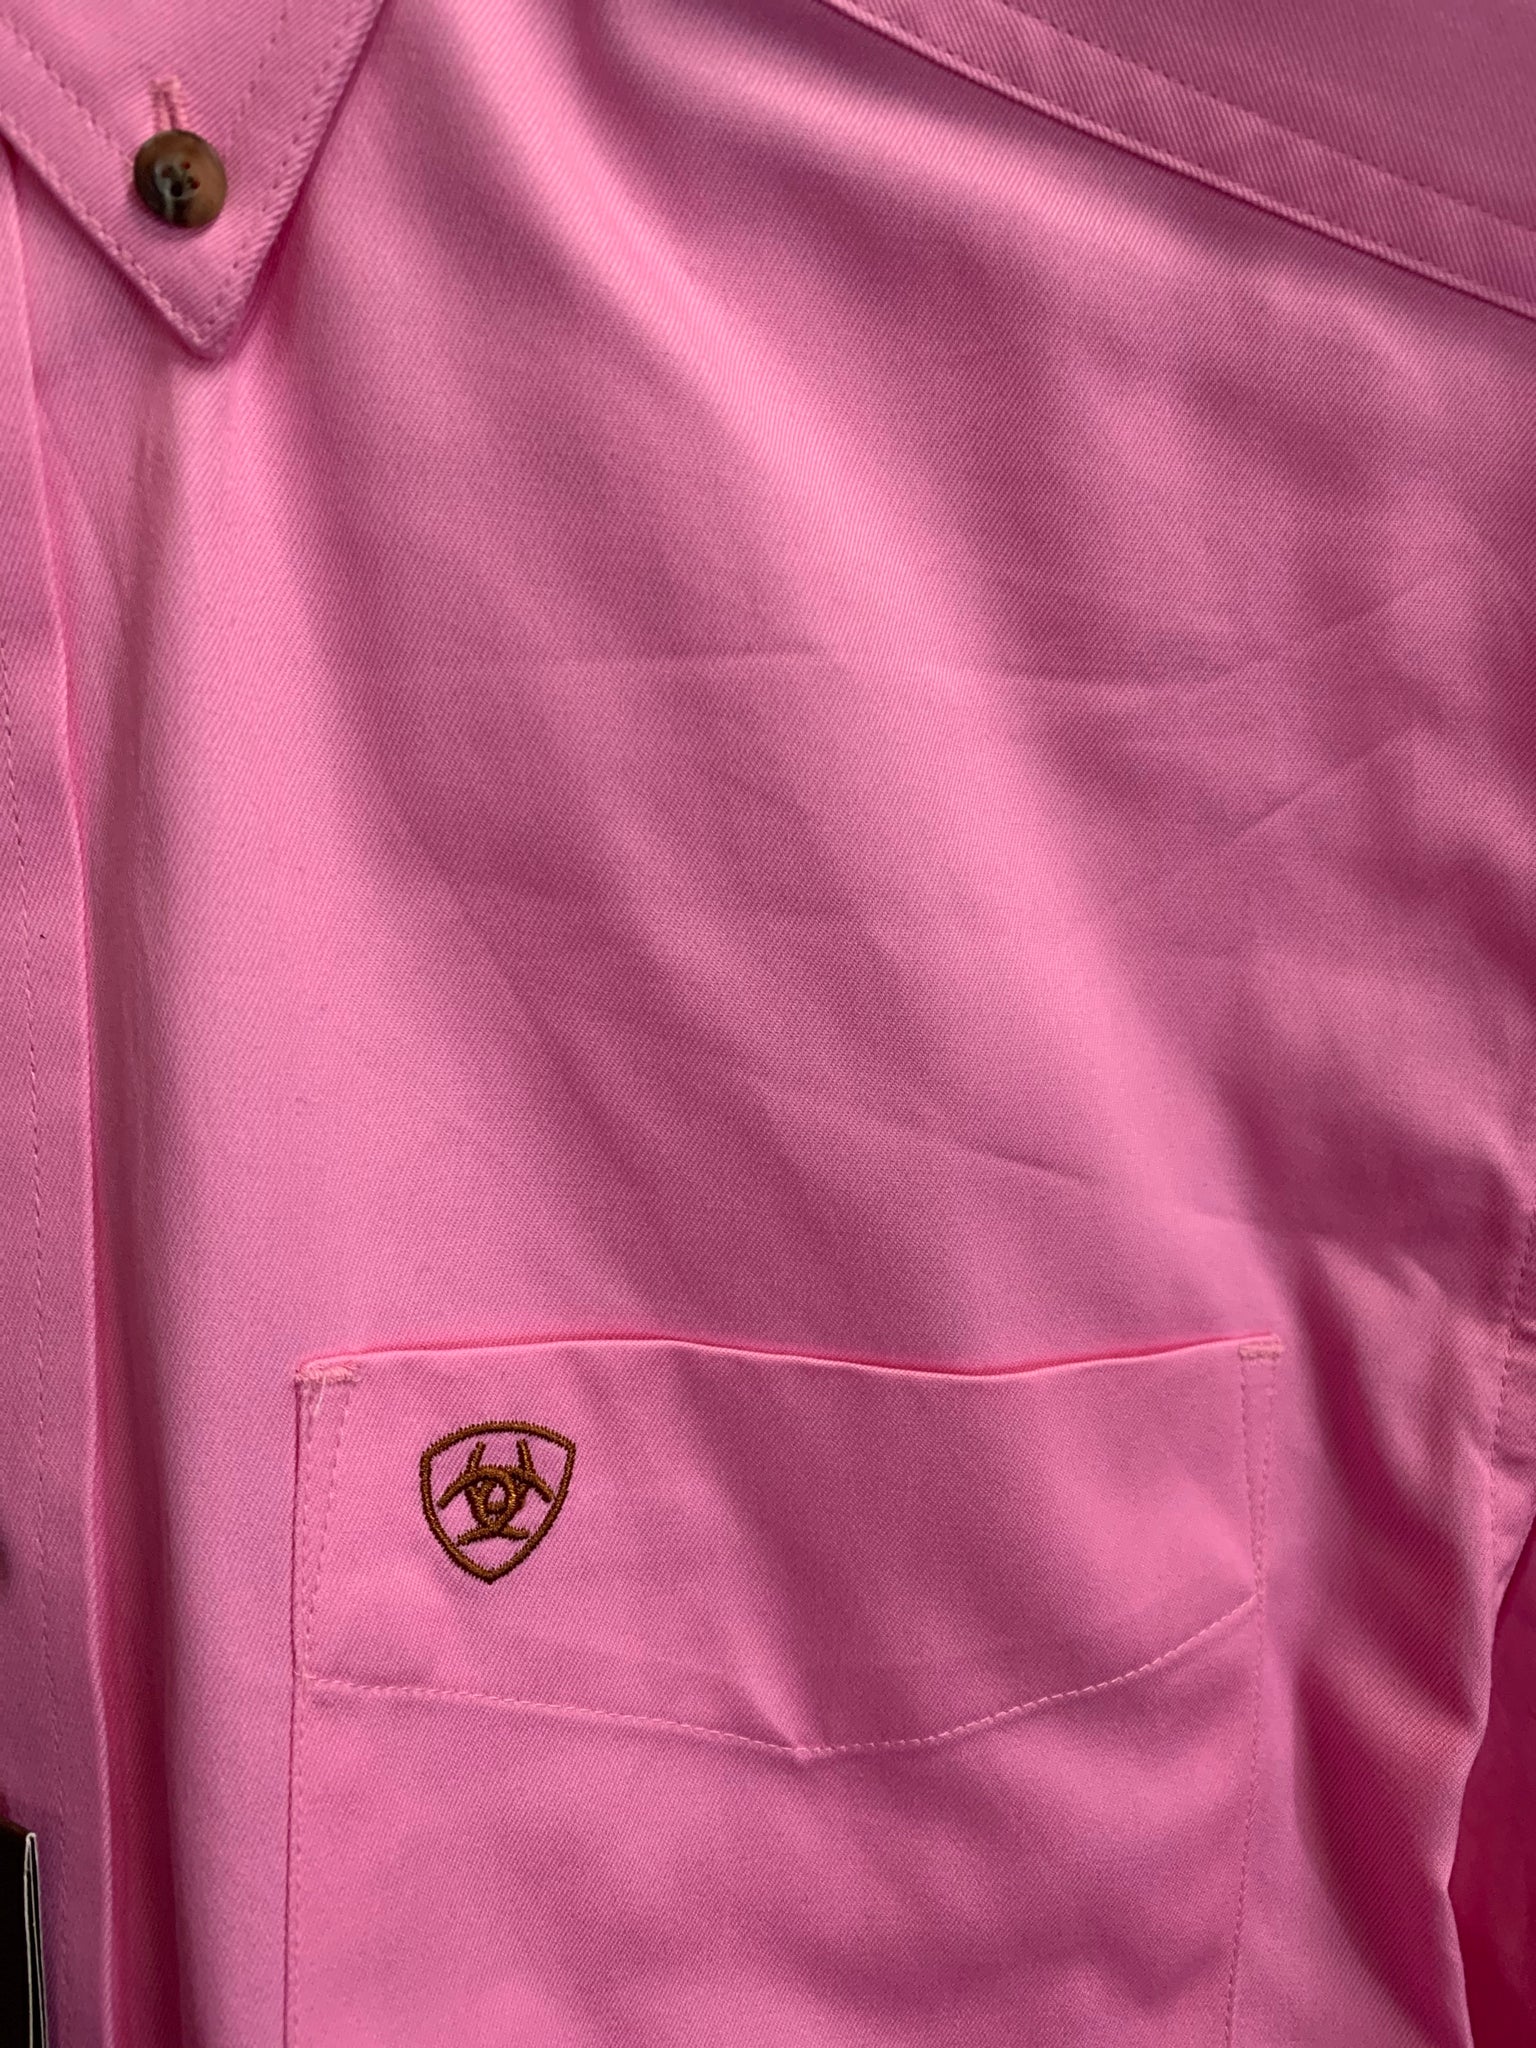 10016692 Ariat Men's Solid Twill L/S Shirt Prism Pink